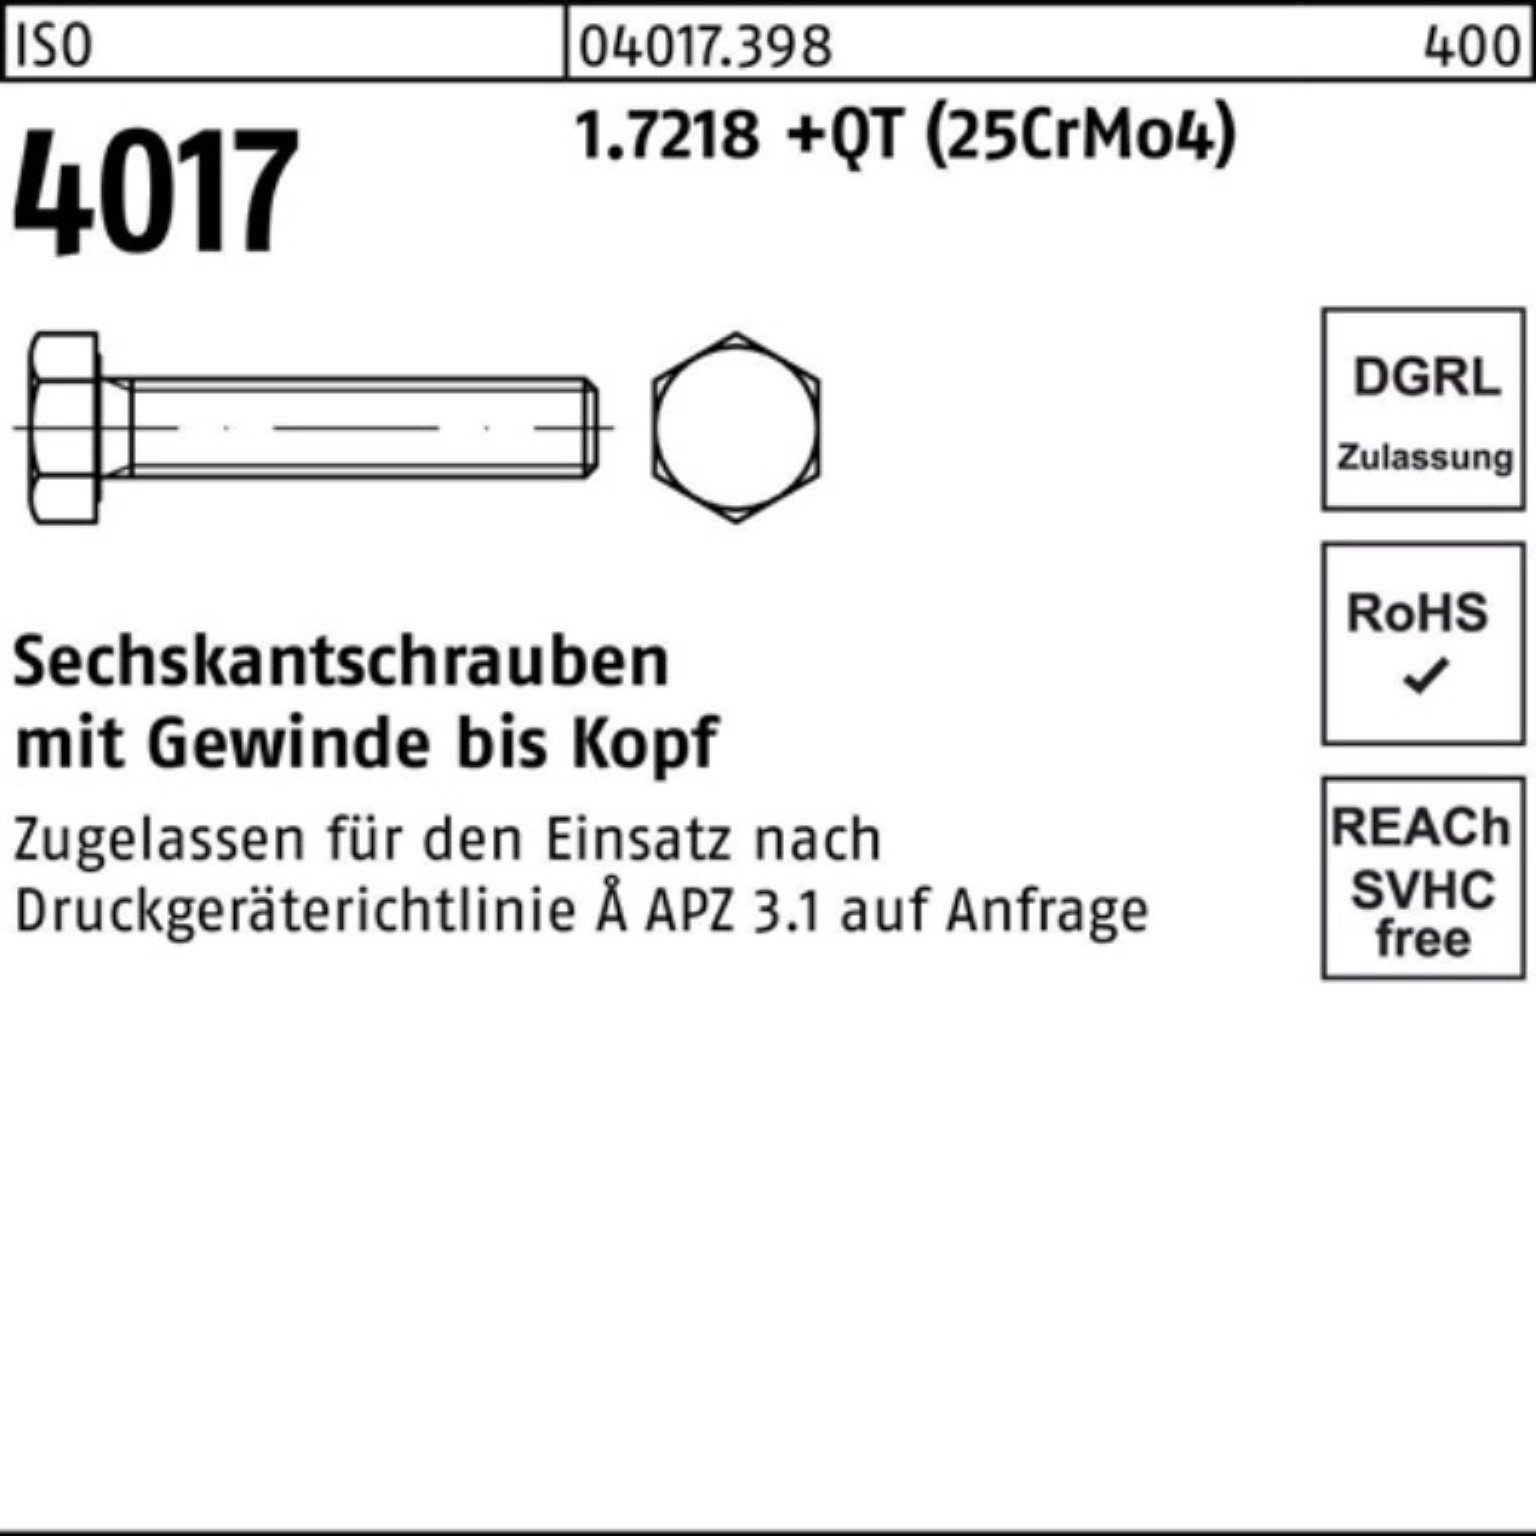 4017 100er Sechskantschraube Bufab Sechskantschraube Pack (25CrMo4) VG ISO 50 1.7218 +QT M24x